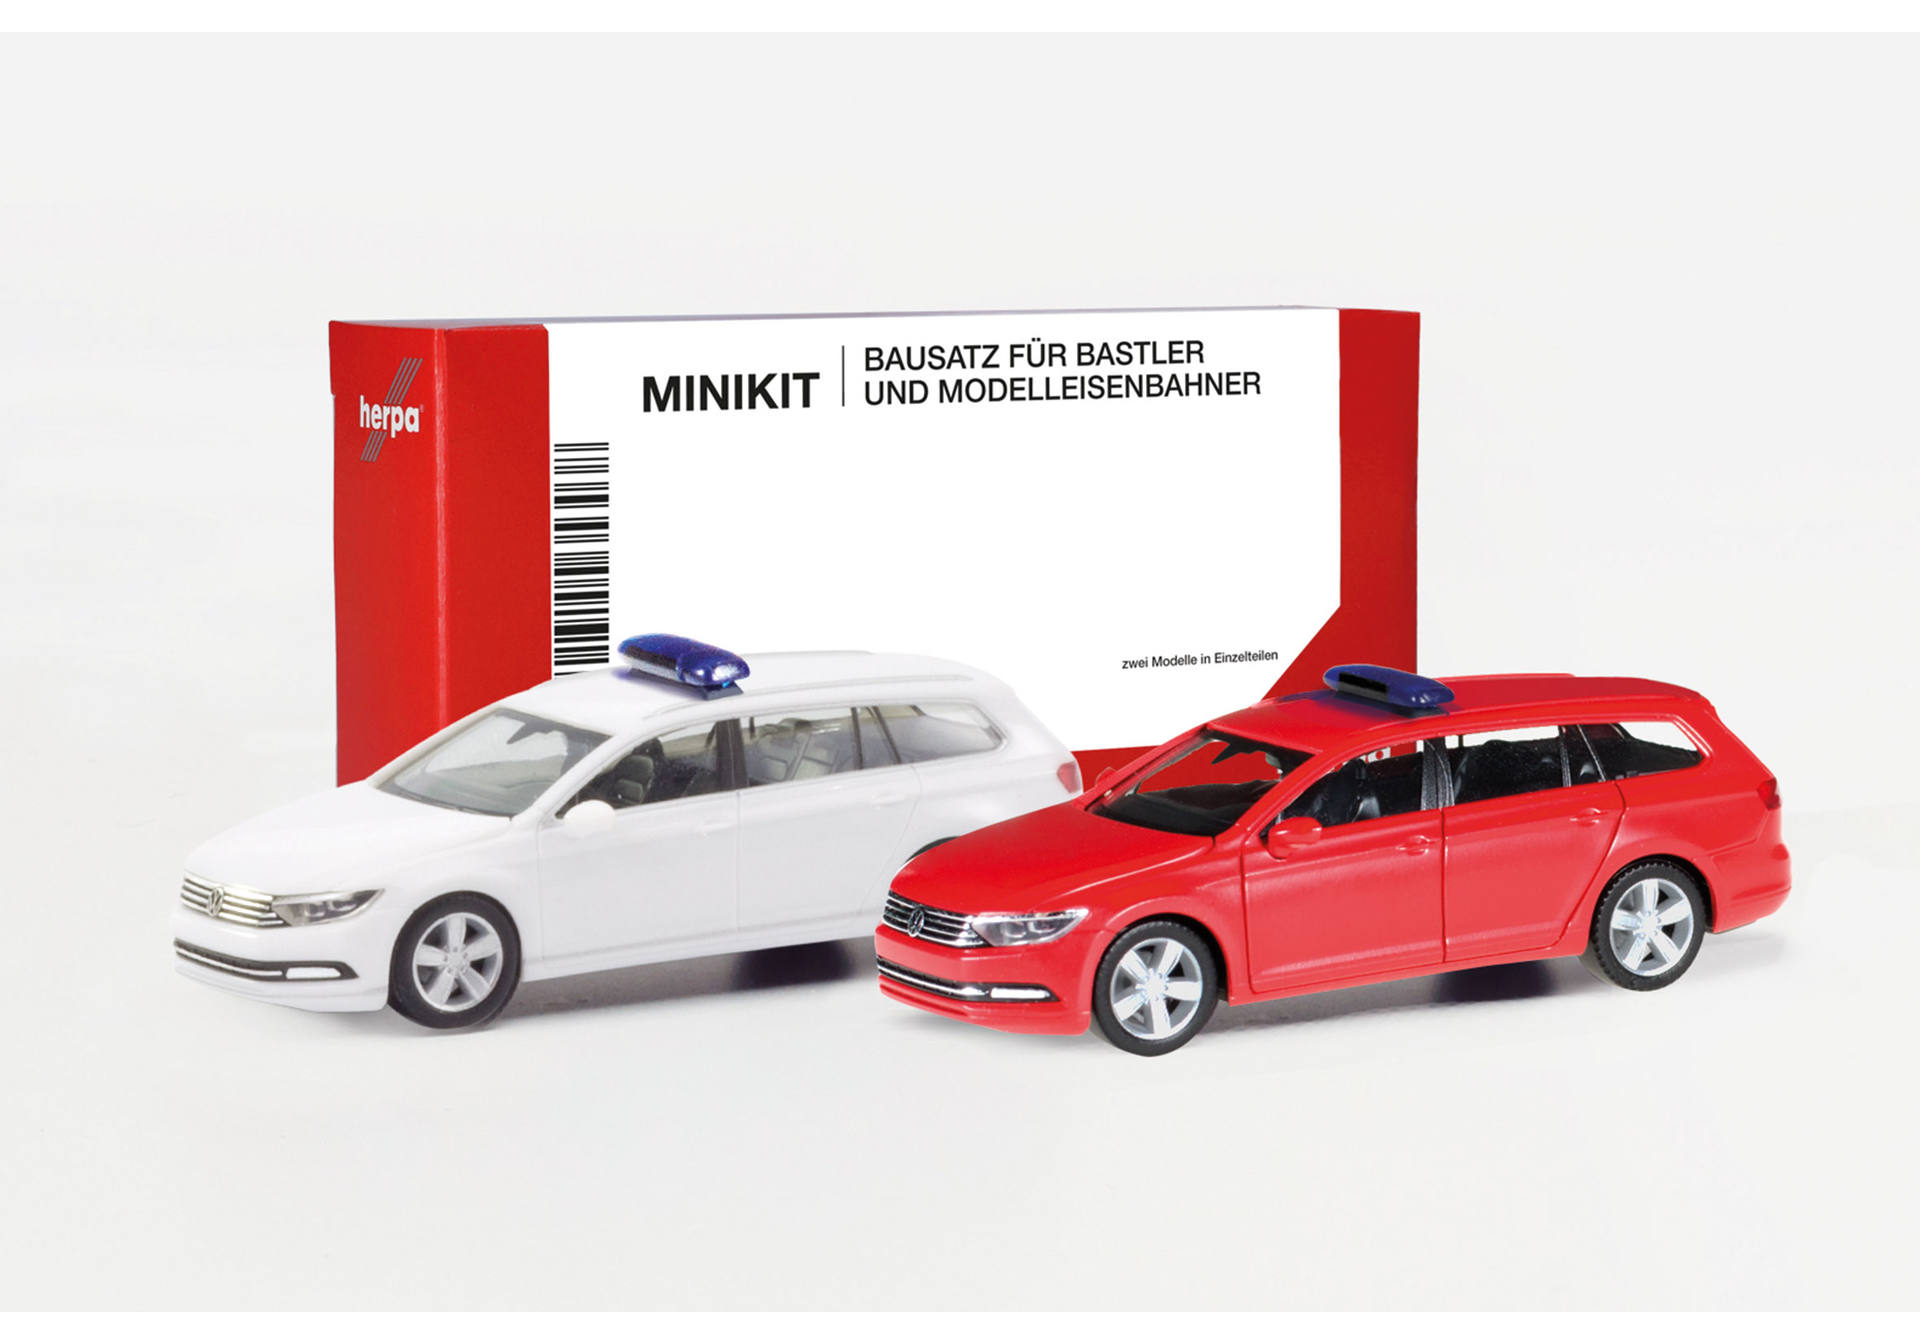 MiniKit 2 x VW Passat Variant with lightbar system